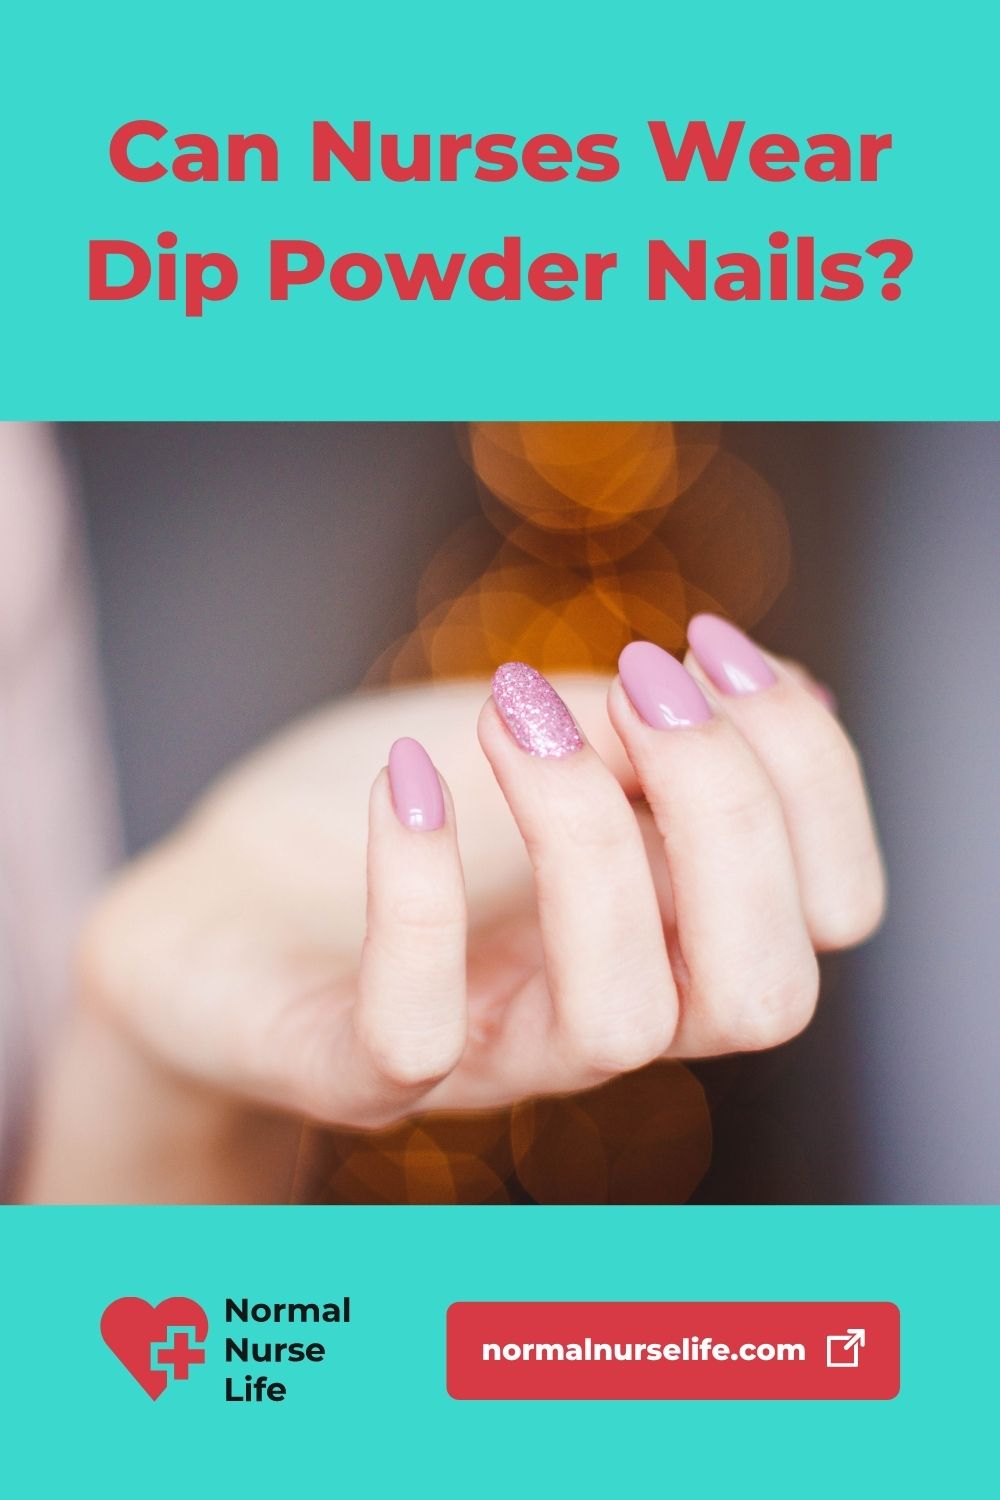 Can nurses wear dip powder nails or not